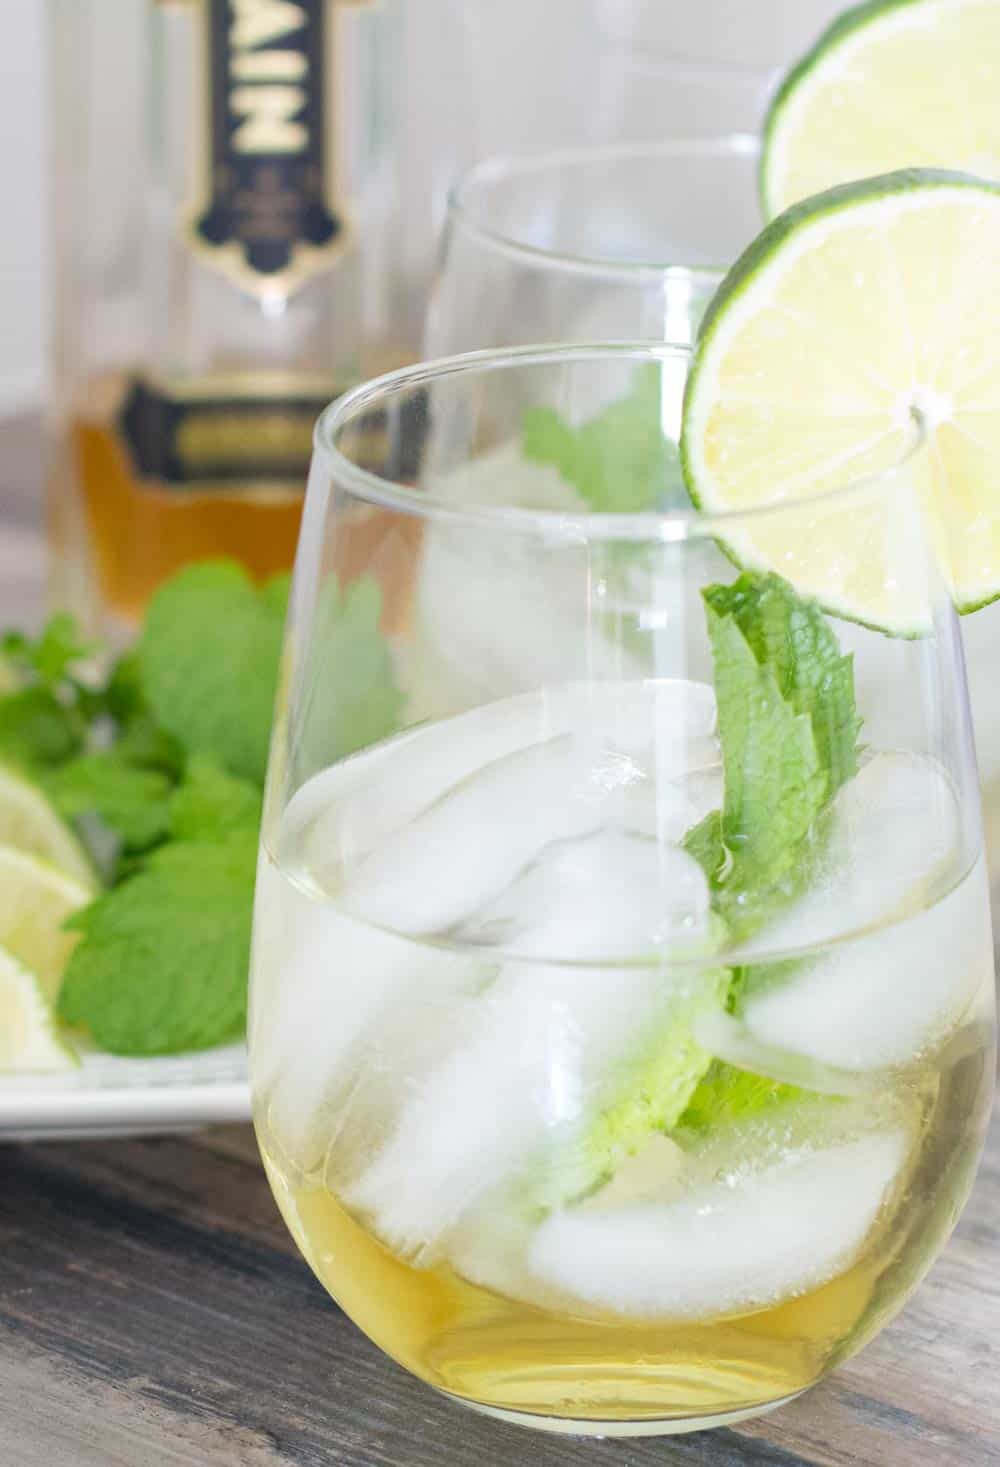 Hugo cocktail in a glass with elderflower liqueur bottle behind